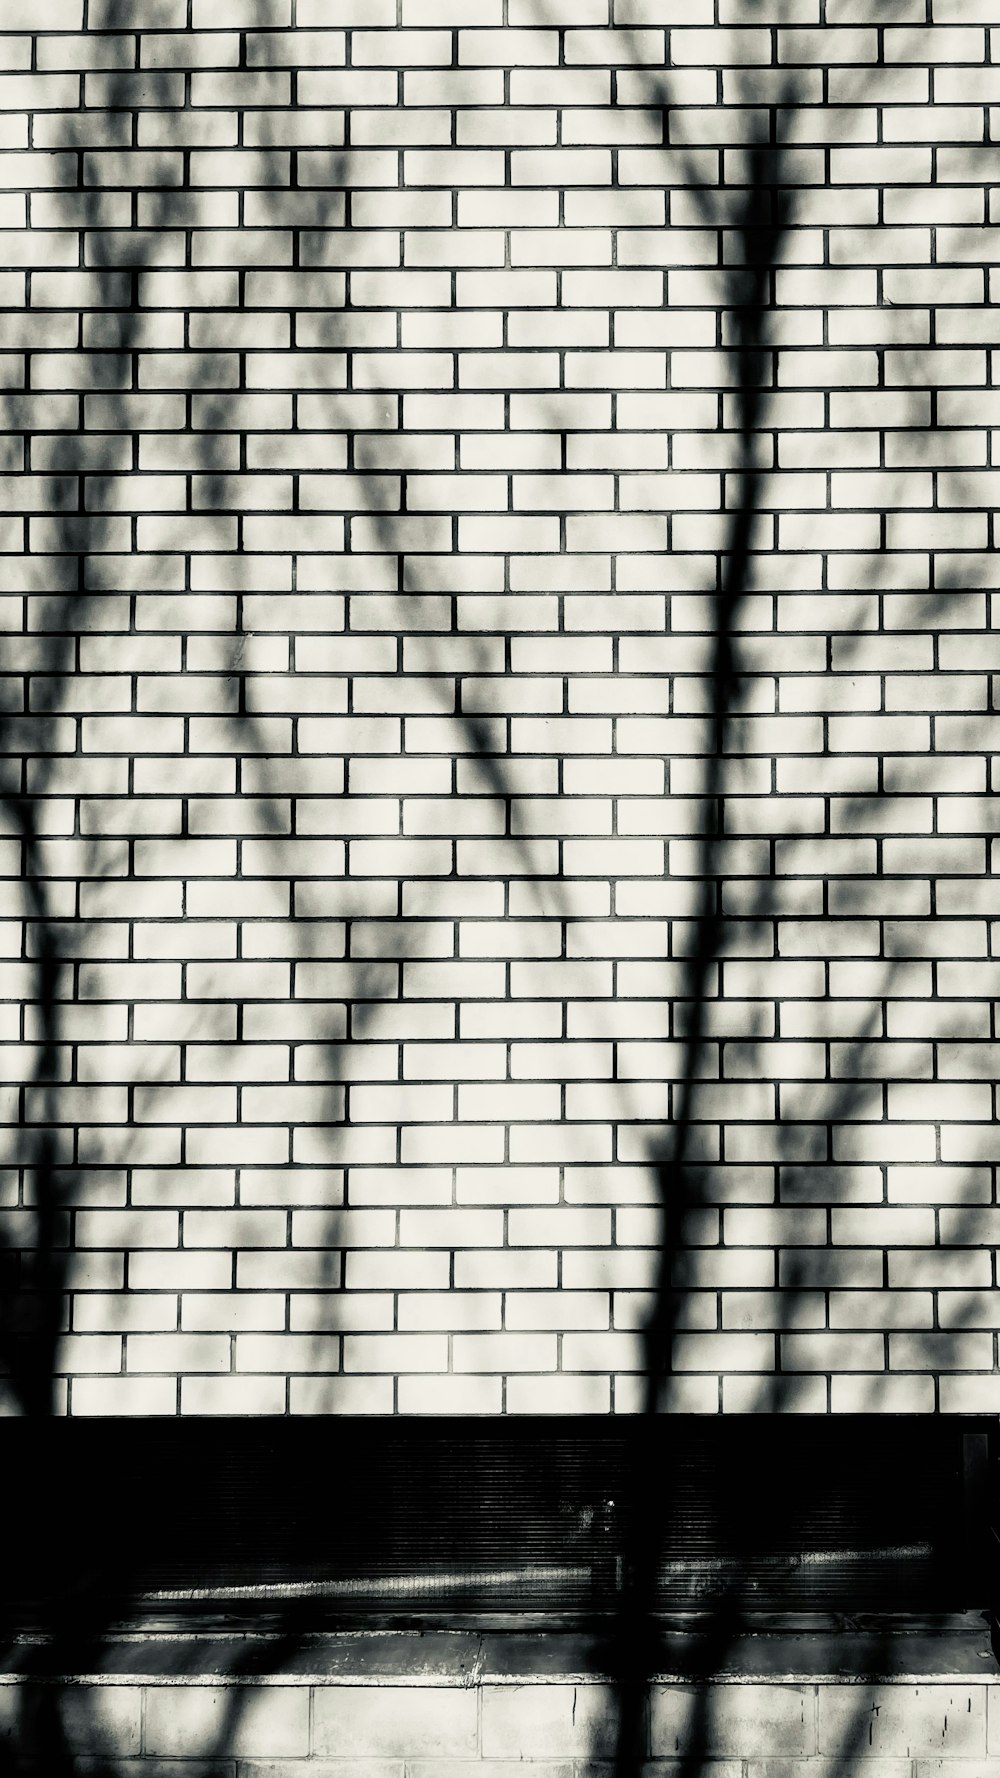 a tree casting a shadow on a brick wall